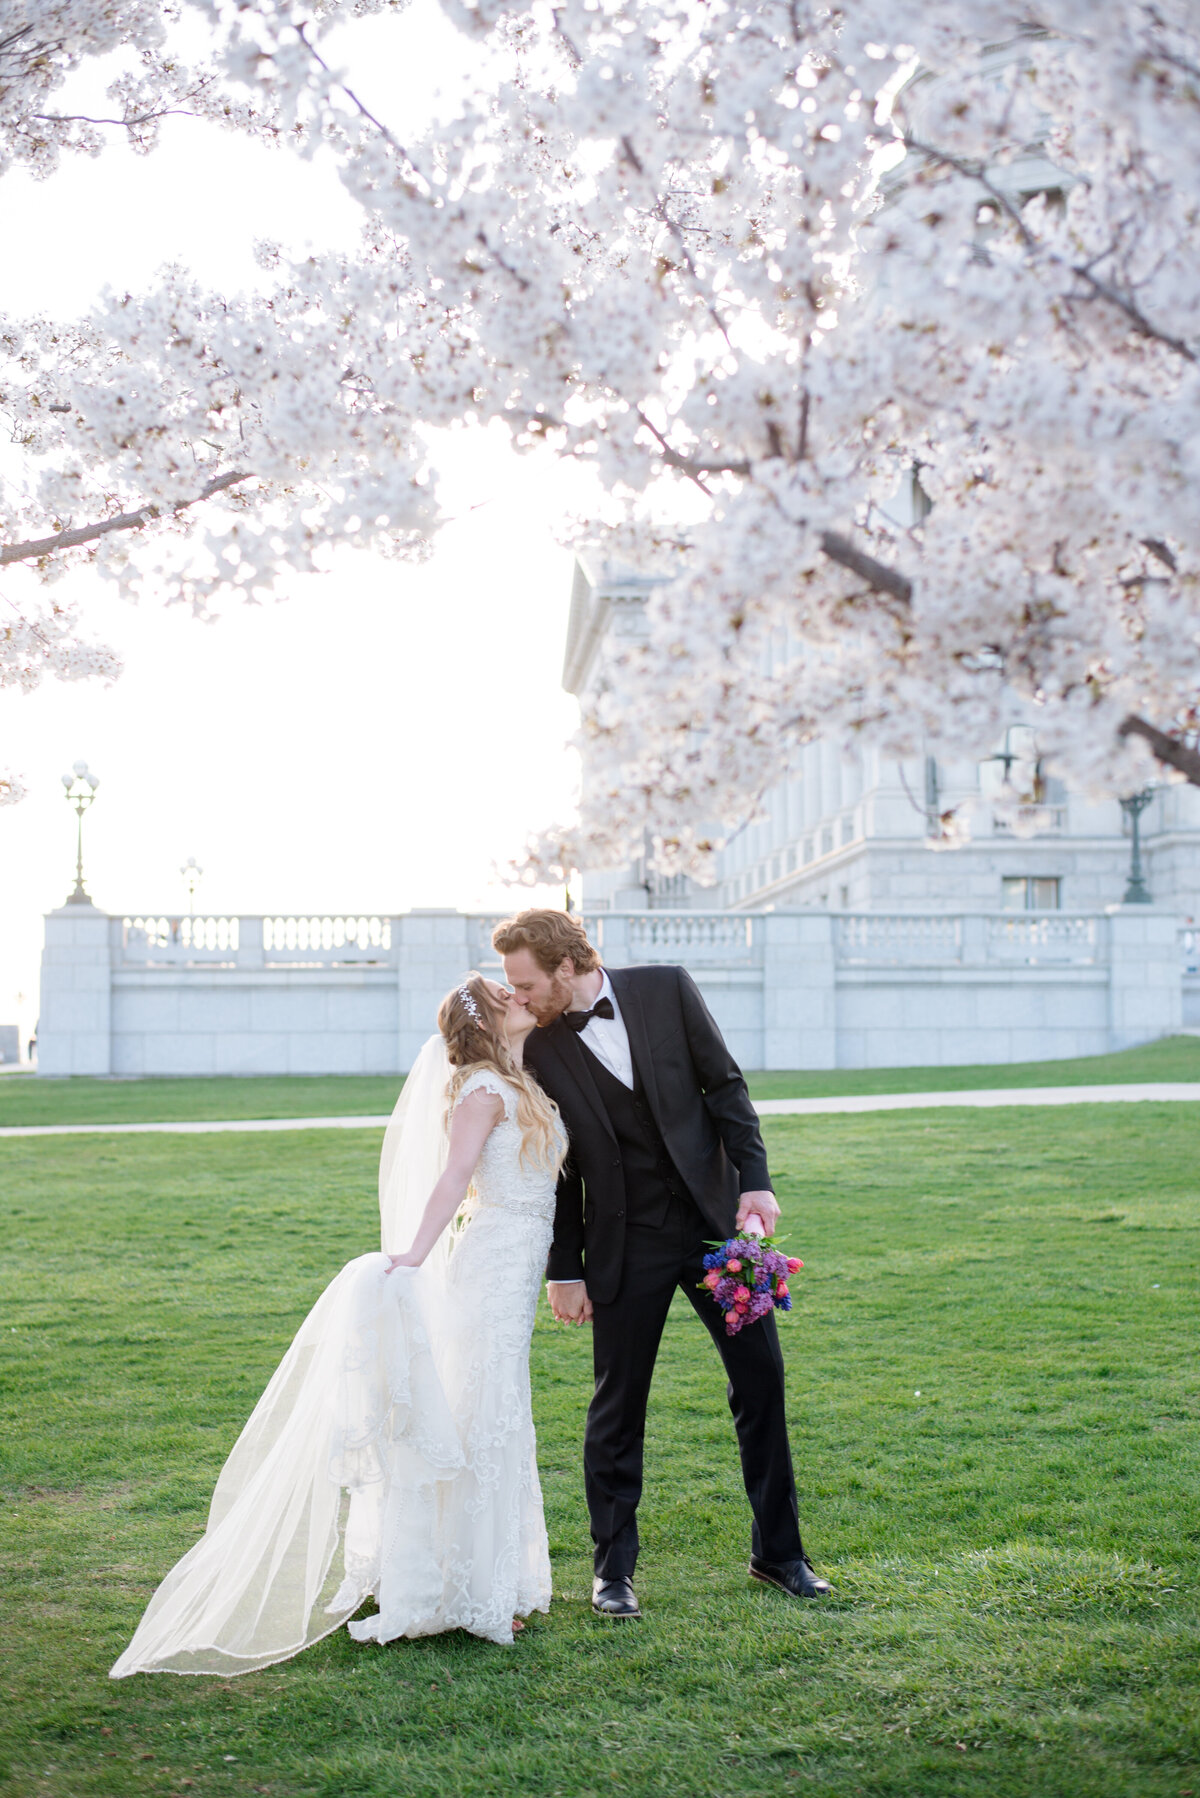 Shalee&Grant - Utah Capitol Cherry Blossoms Wedding Formals -80